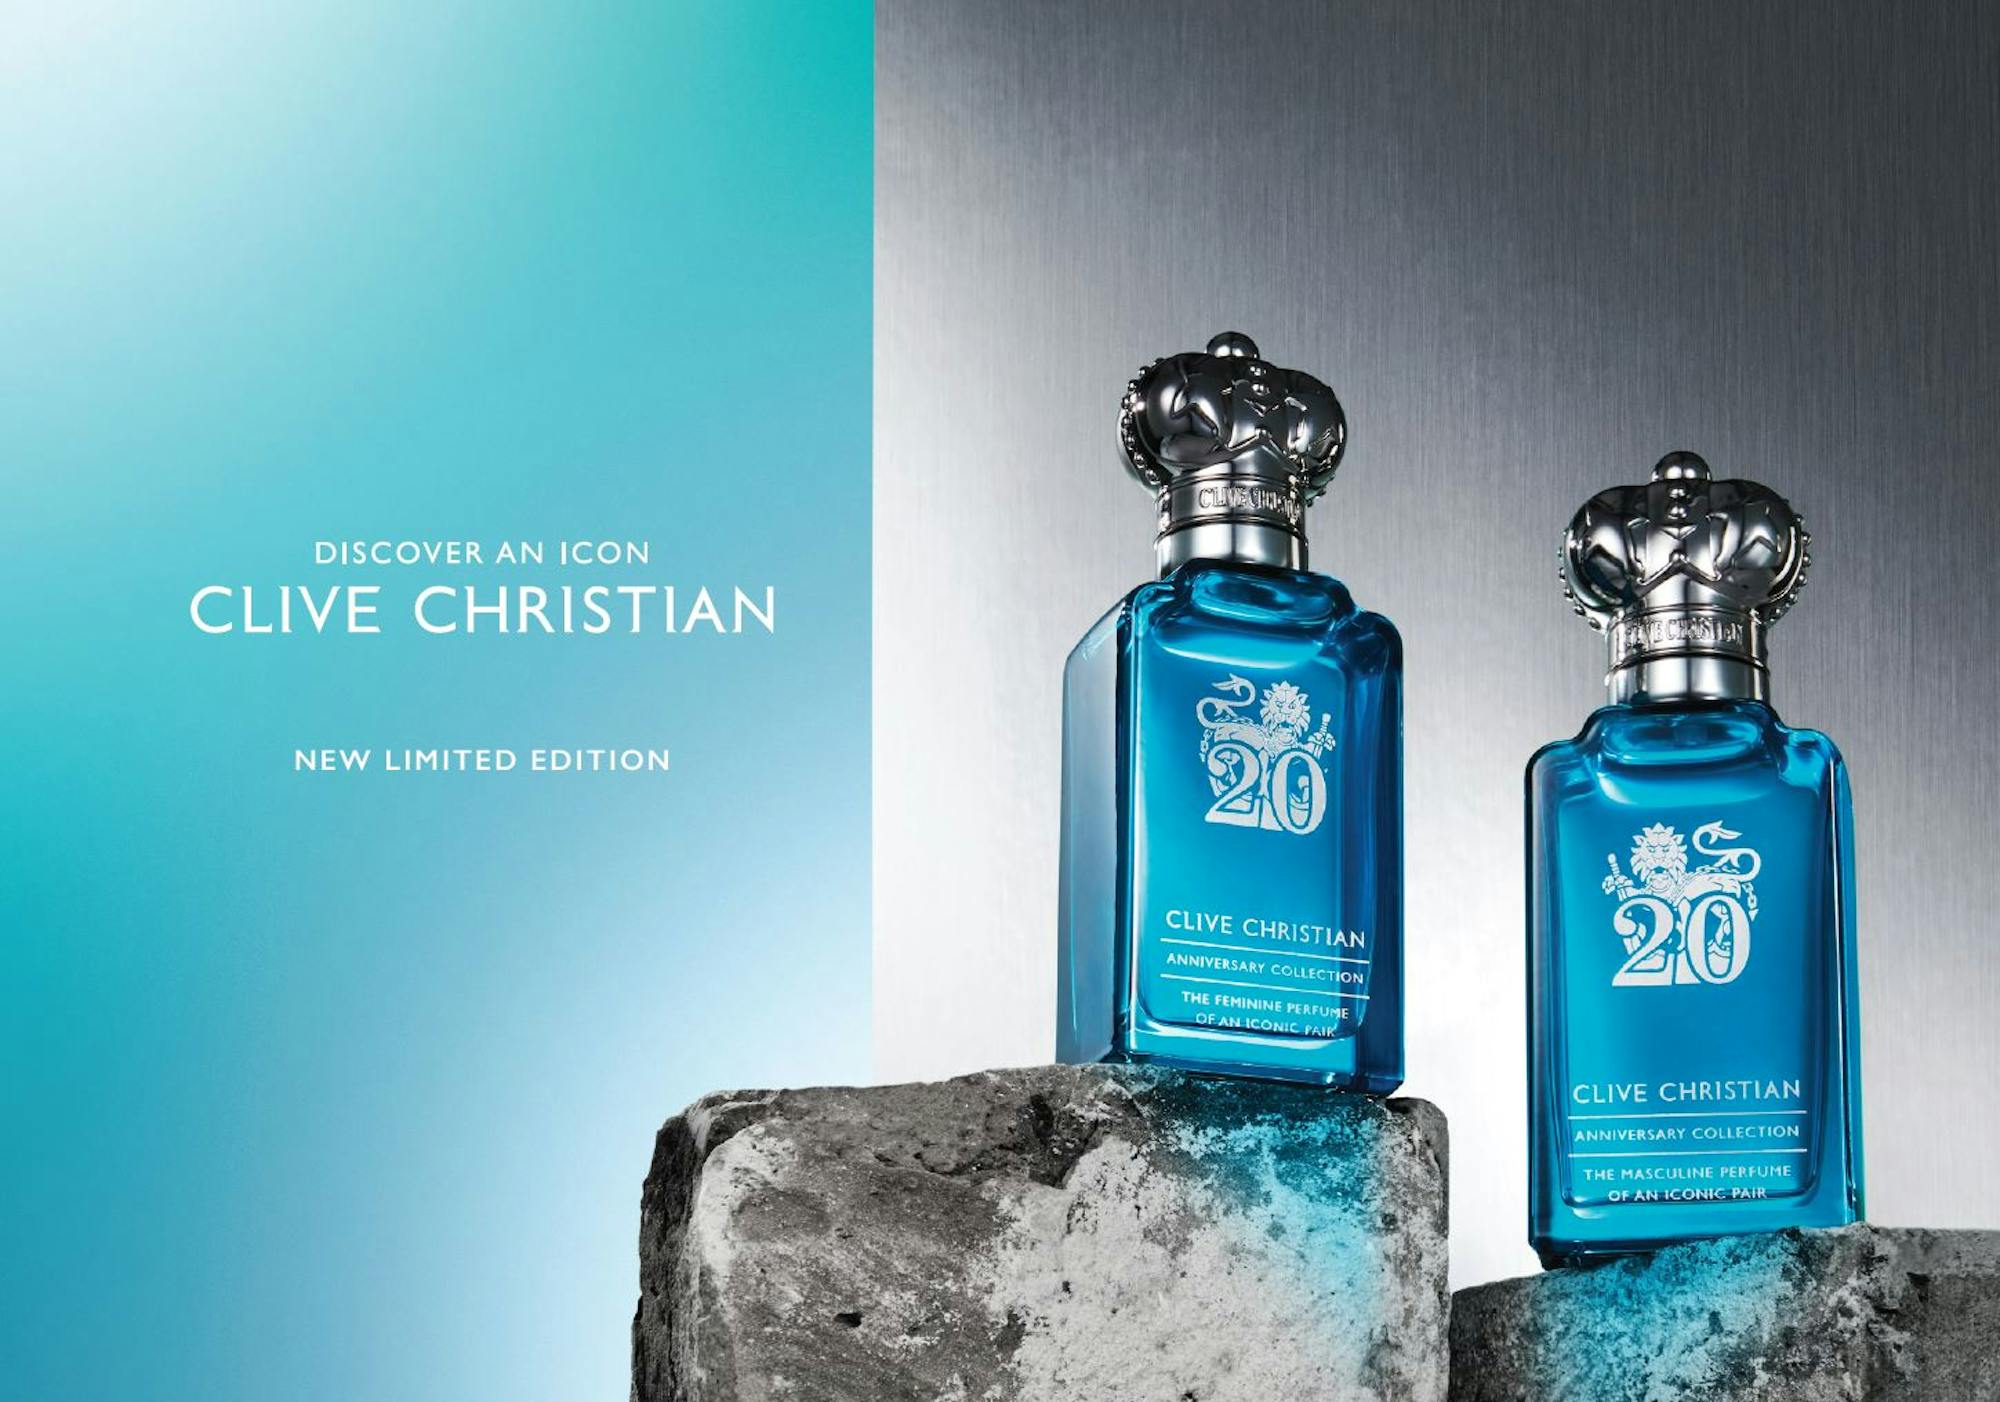 Clive Christian Perfume celebrates its 20th anniversary  